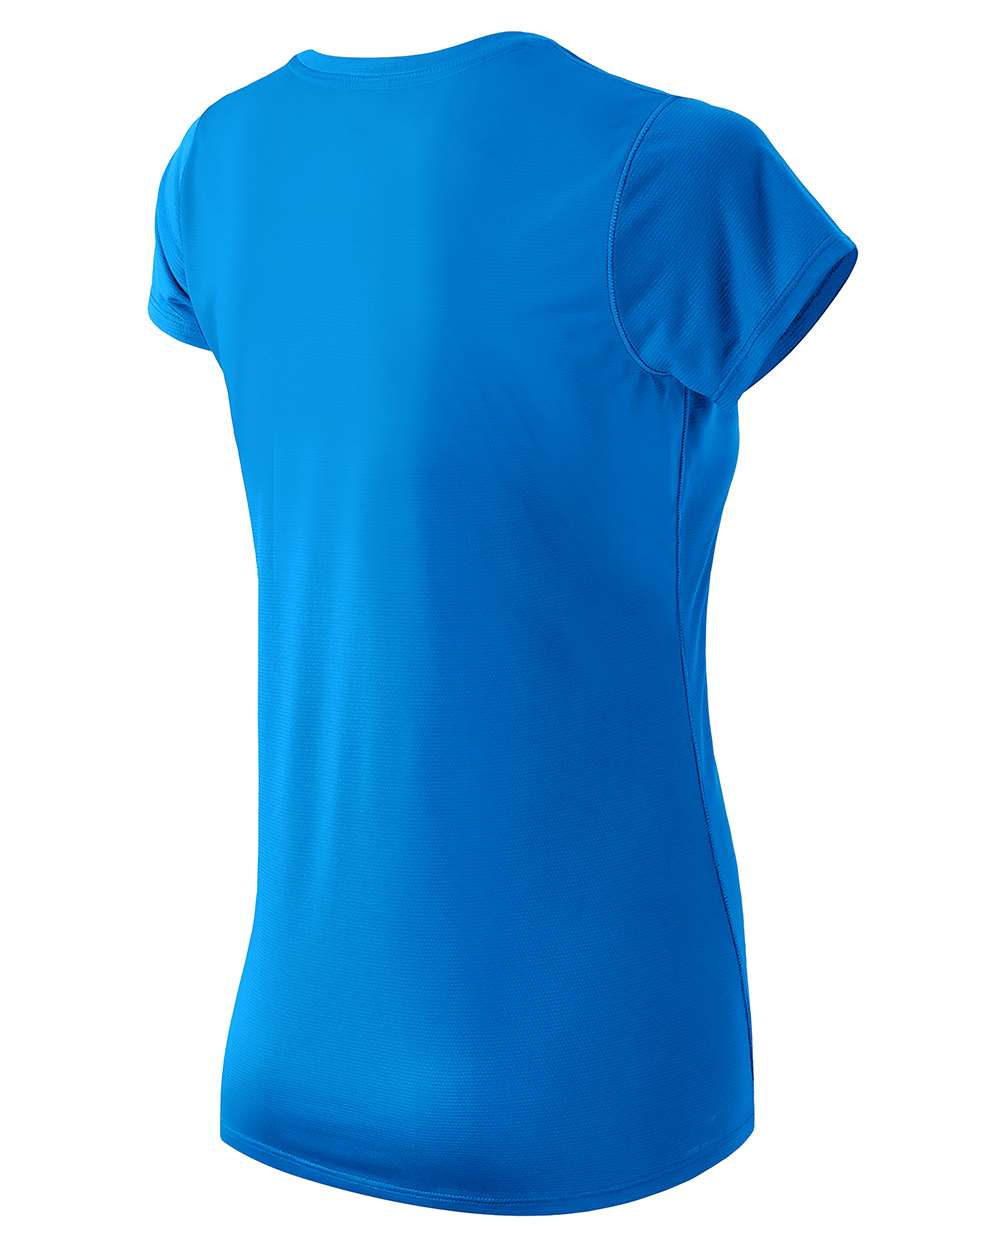 New Balance Women's Performance T-Shirt #WT81036P Light Blue Back